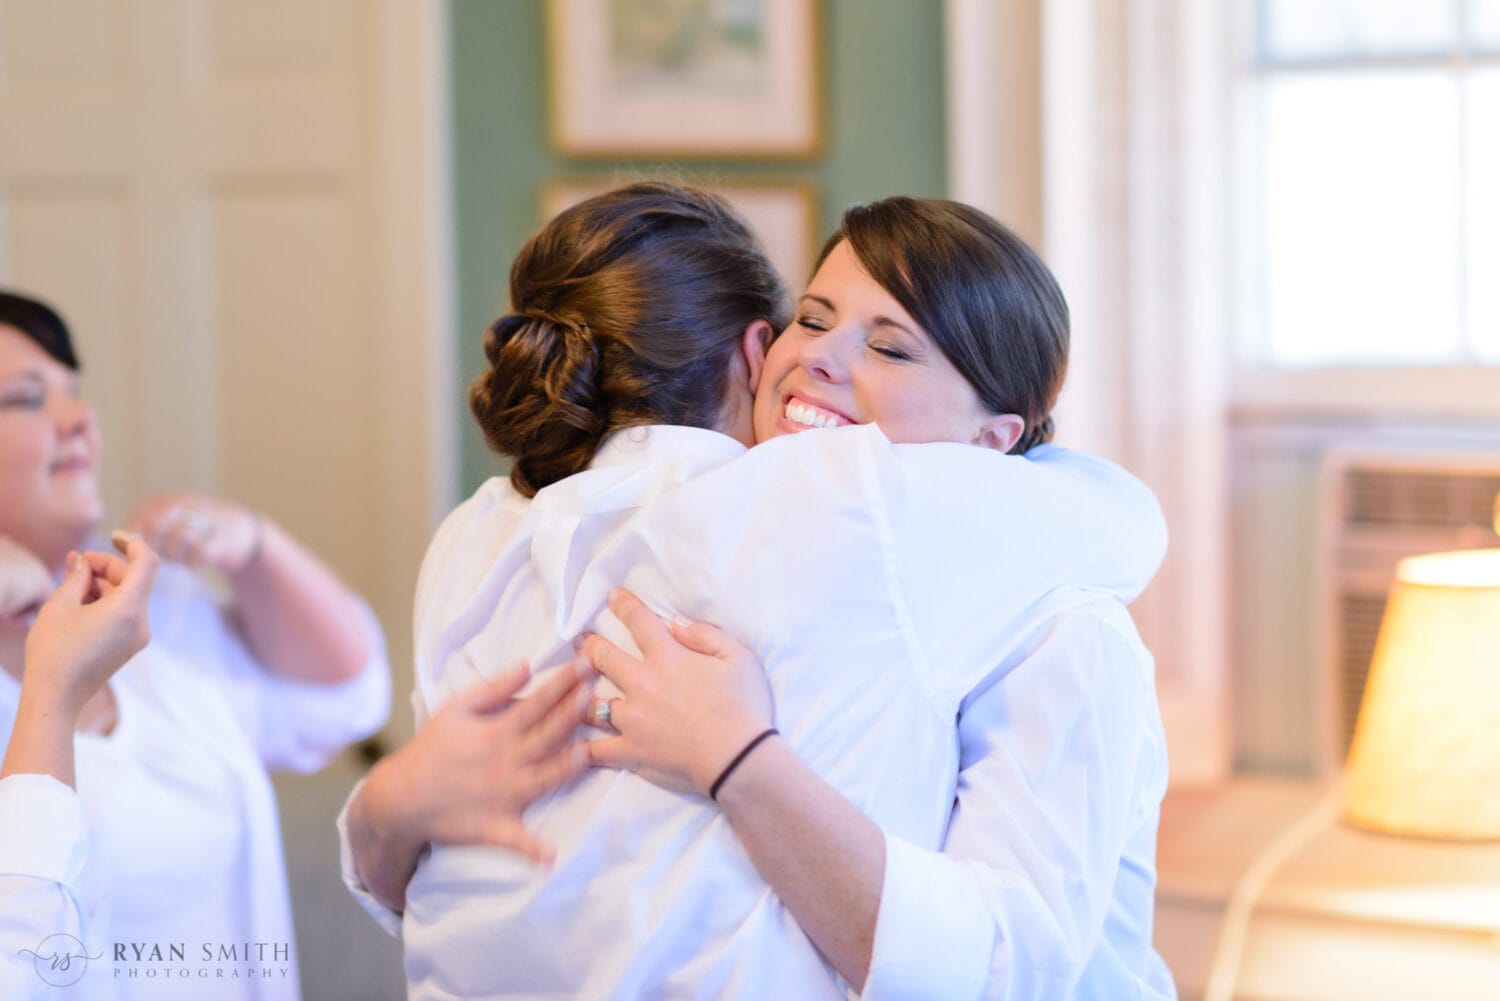 Hug from the bridesmaid - Downtown Charleston, SC